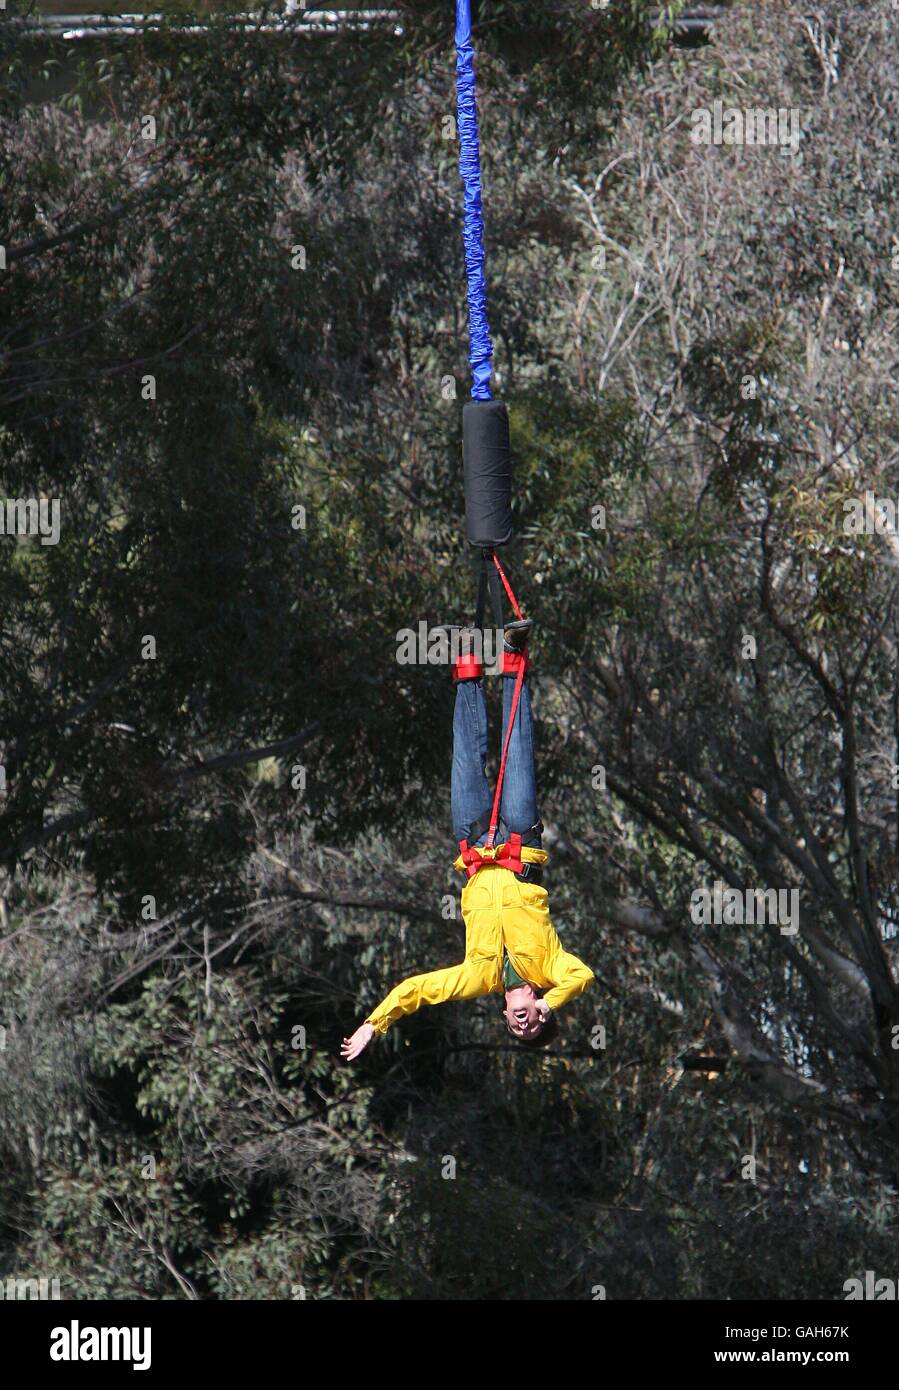 Jim Carrey bungee jumps for movie - Pasadena. Jim Carrey bungee jumps off the West Colorado Blvd bridge for his new film Yes Man, in Pasadena, Ca. Stock Photo